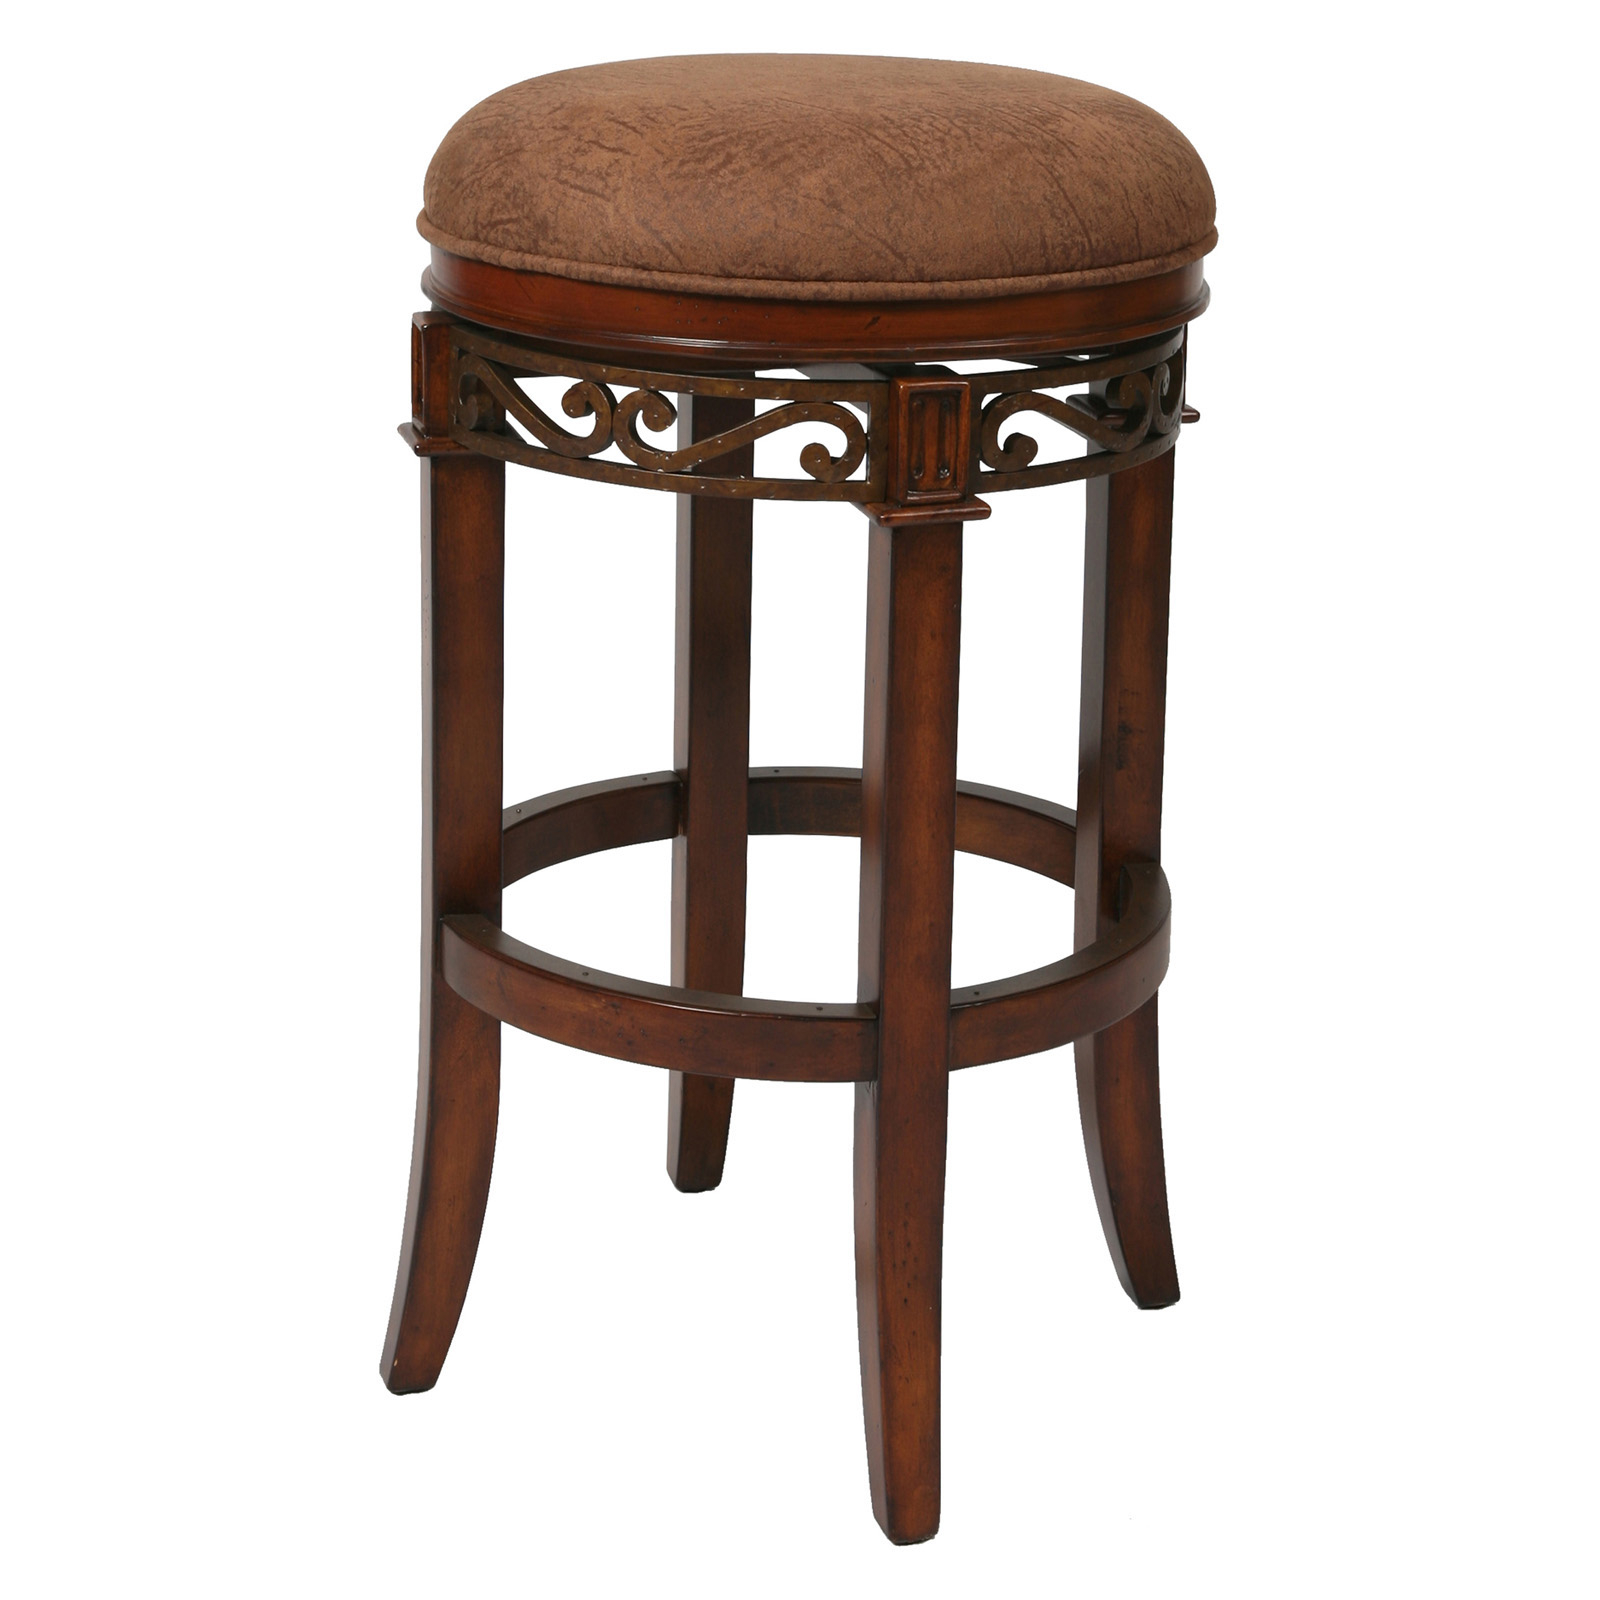 Solid wood swivel bar stools 2